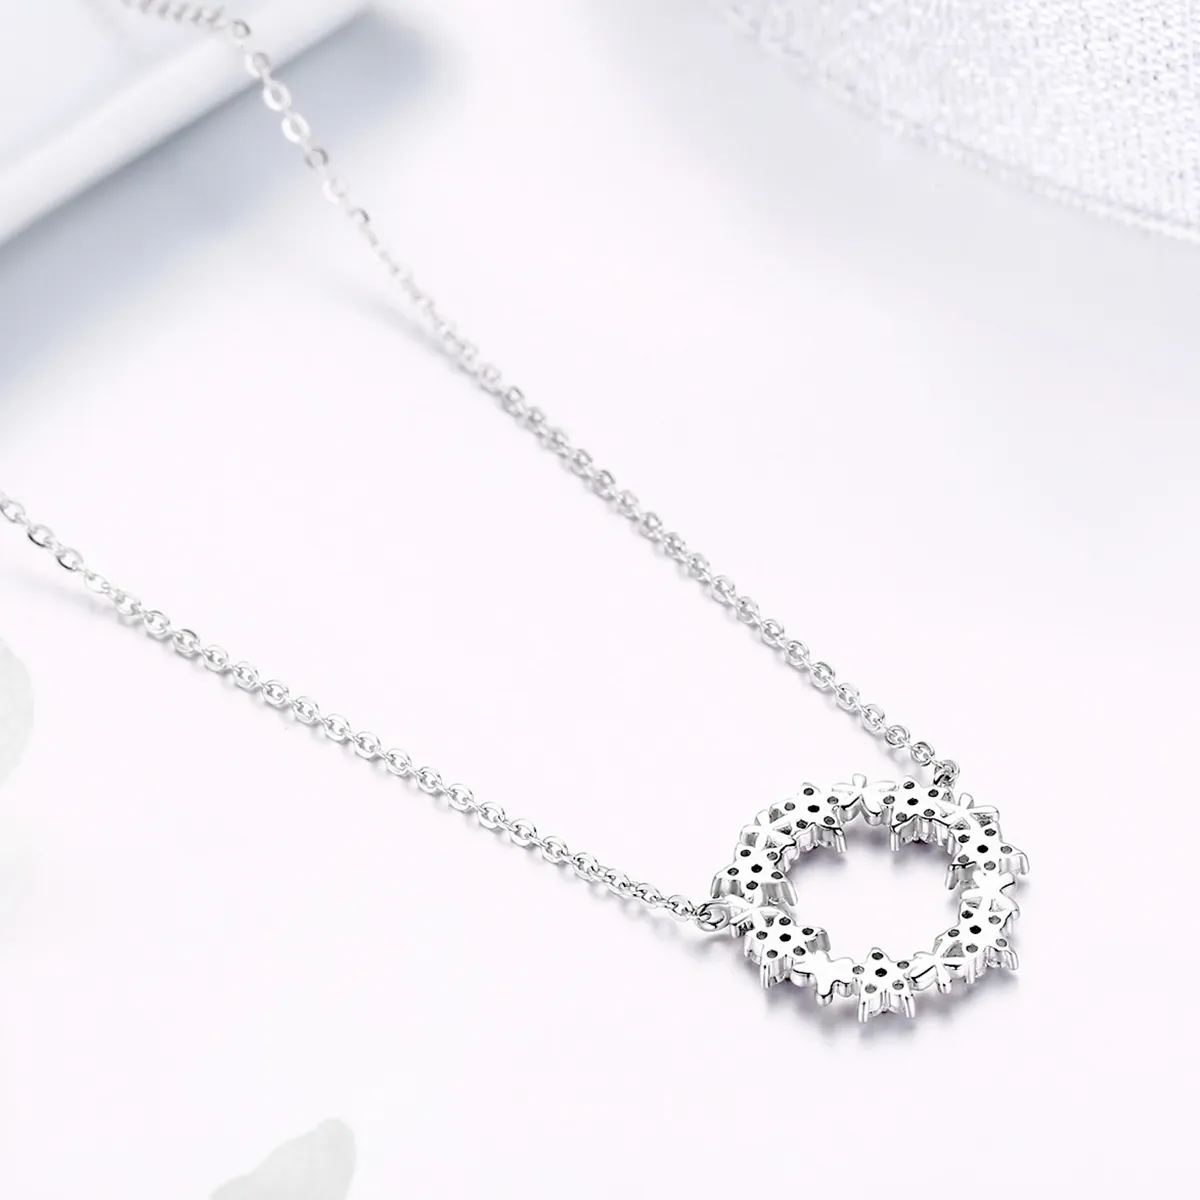 Pandora Style Silver Full of Stars Pendant Necklace - BSN028